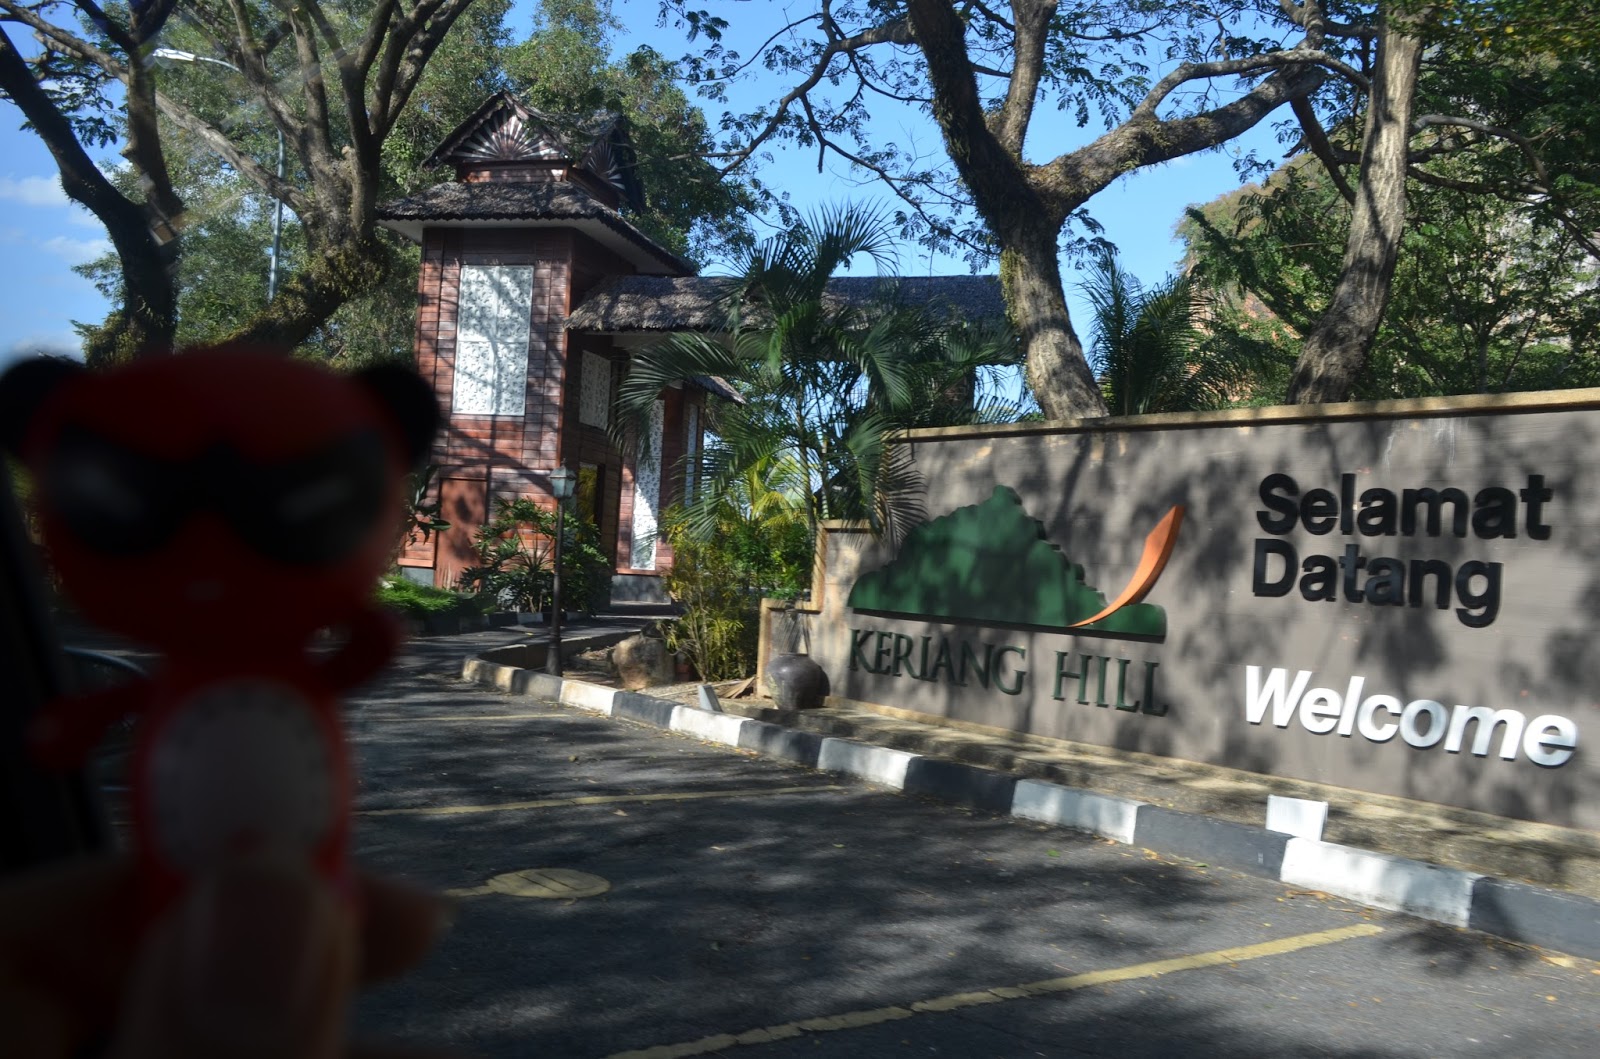 Our Journey : Kedah Alor Setar - Keriang Hill Garden